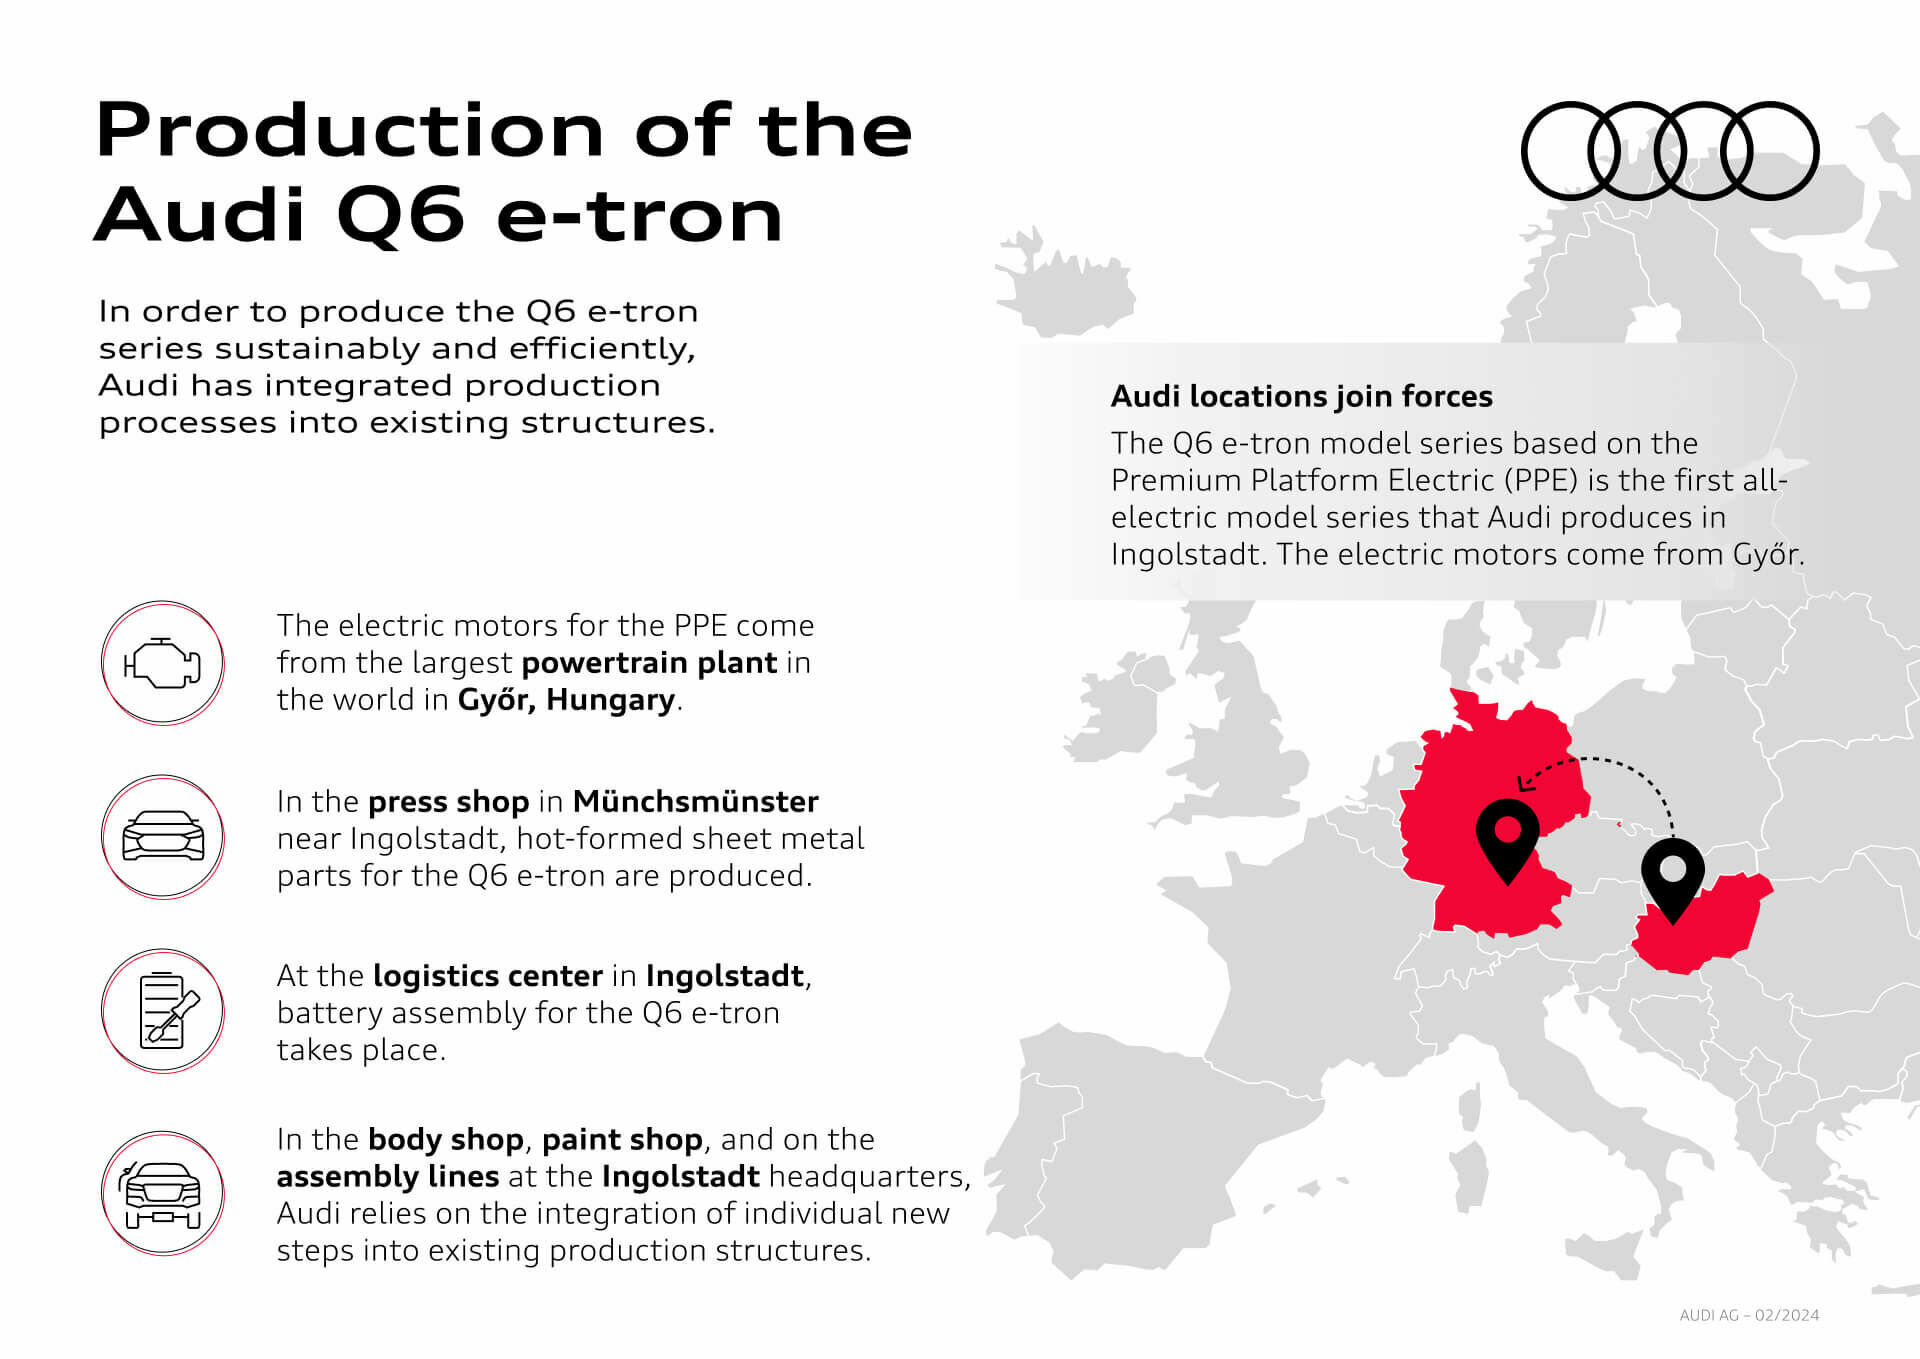 Production of the Audi Q6 e-tron